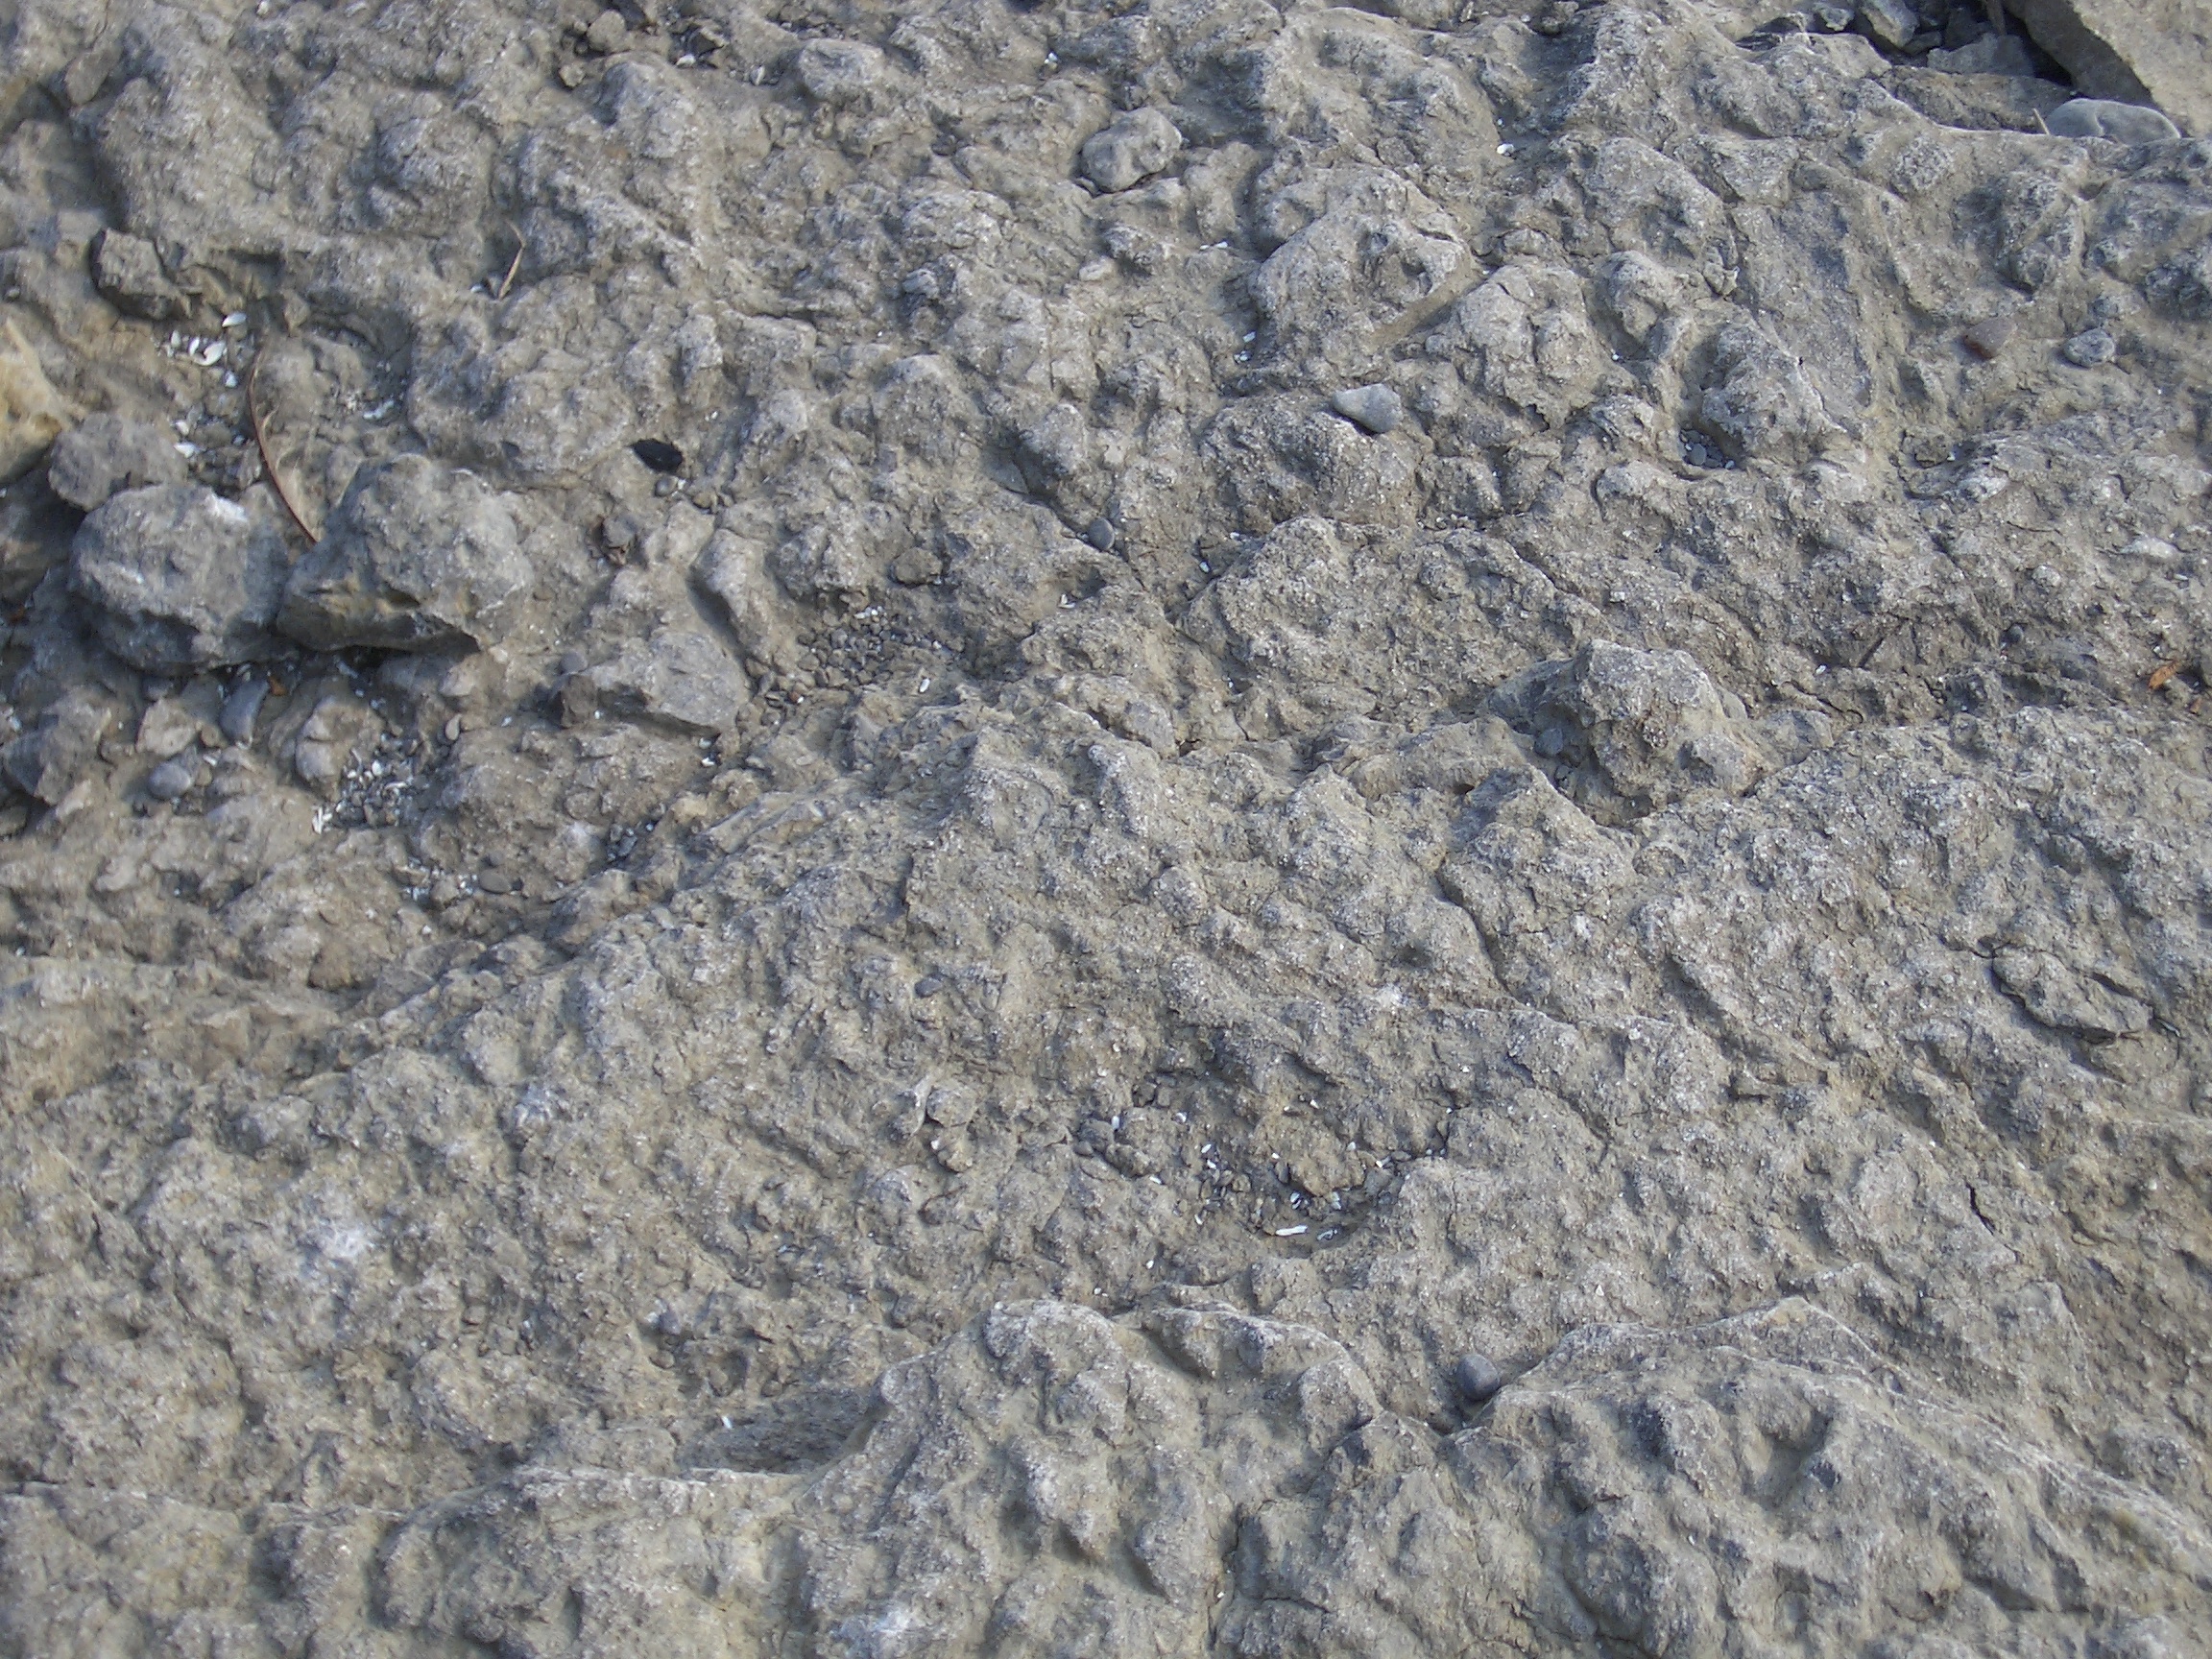 Weathered Rock Surface 3 [image 2304x1728 pixels]